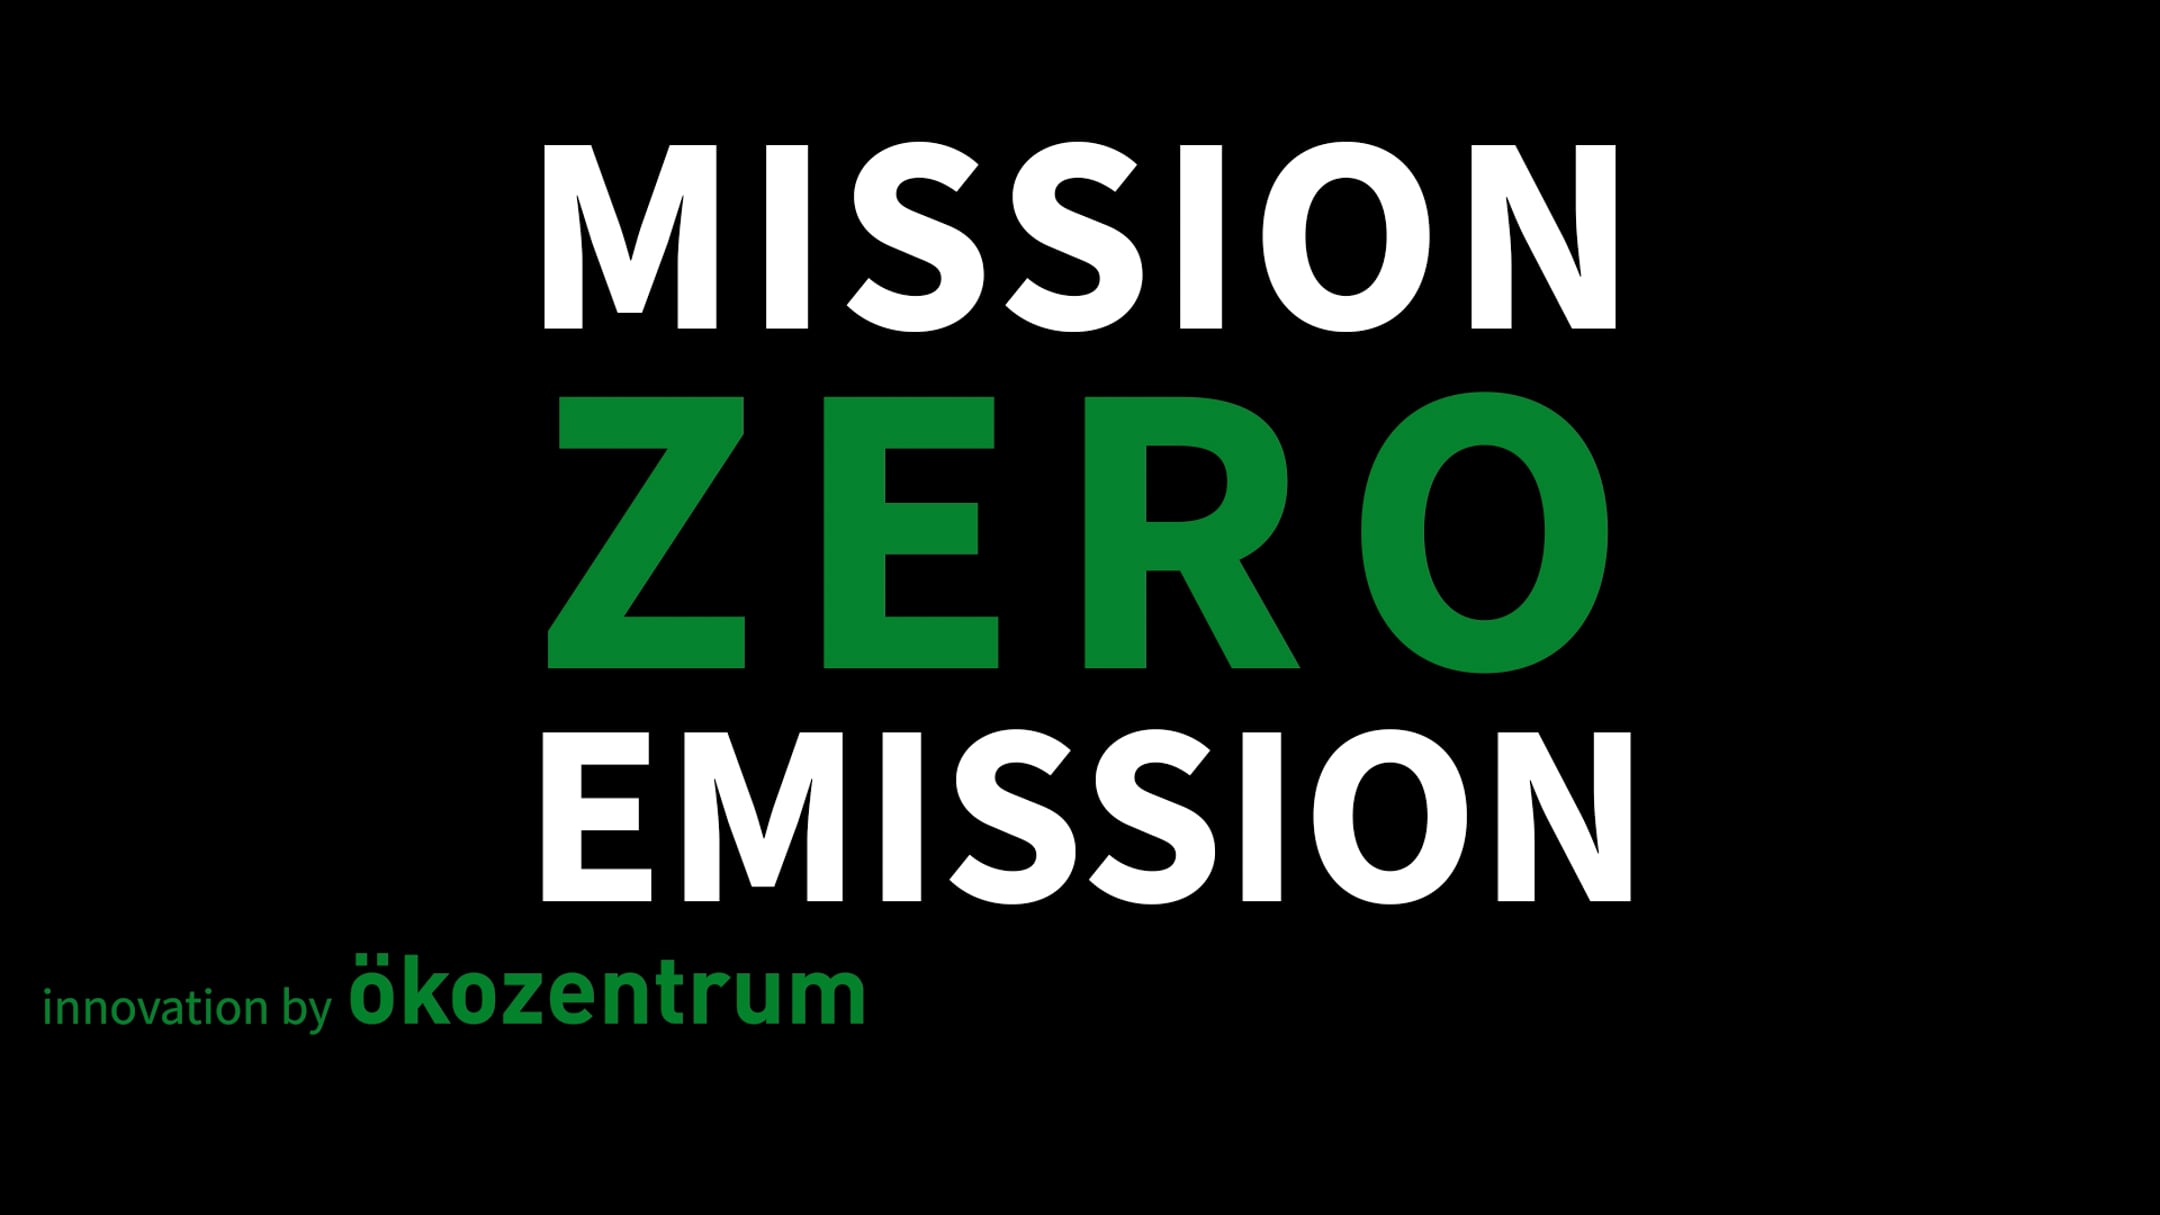 Mission Zero Emission